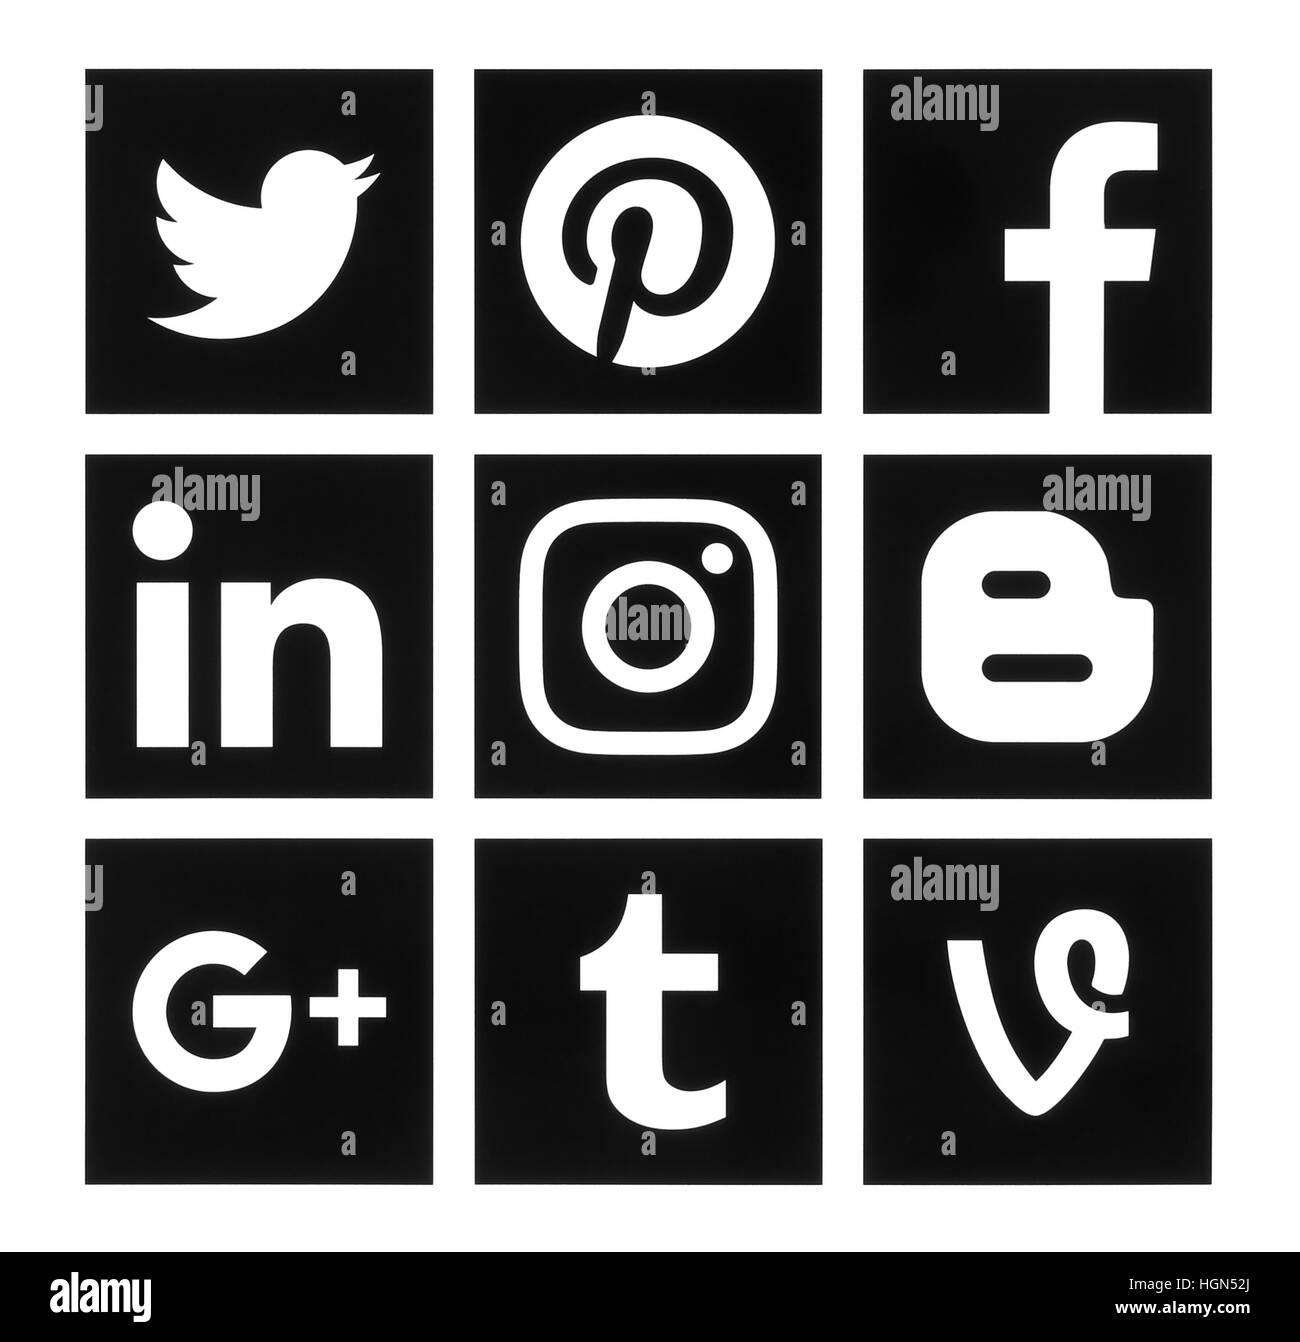 Kiev, Ukraine - October 10, 2016: Collection of popular square black social media logos printed on paper: Facebook, Twitter, Google Plus, Instagram, P Stock Photo